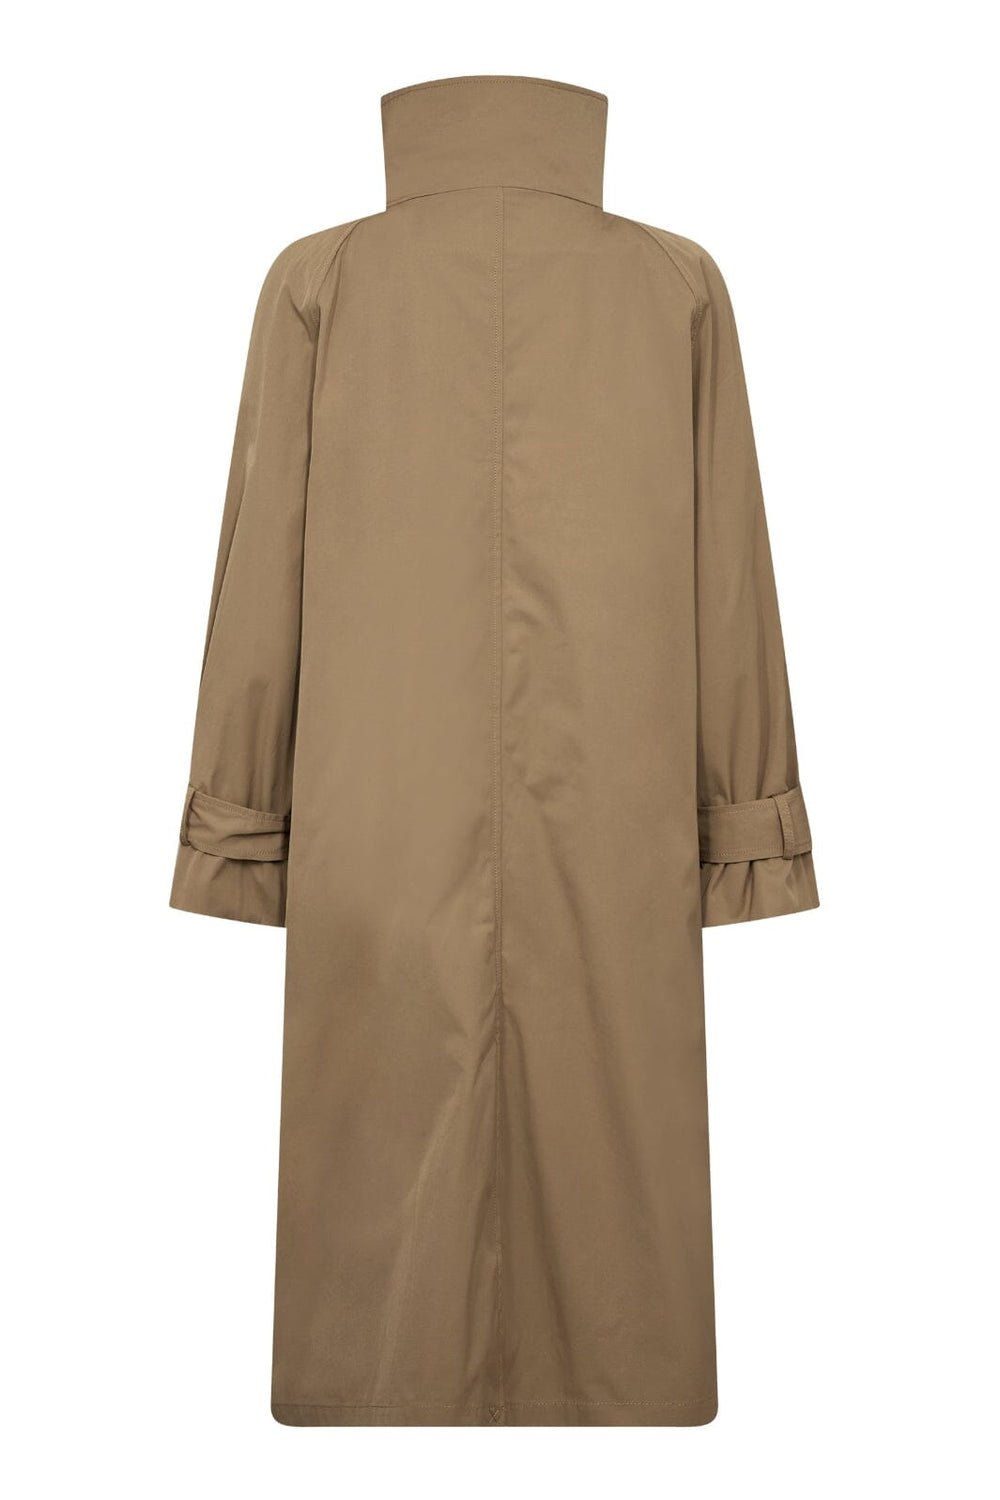 Co´couture - Franciscc Oversize Coat 30157 - 16 Khaki Jakker 